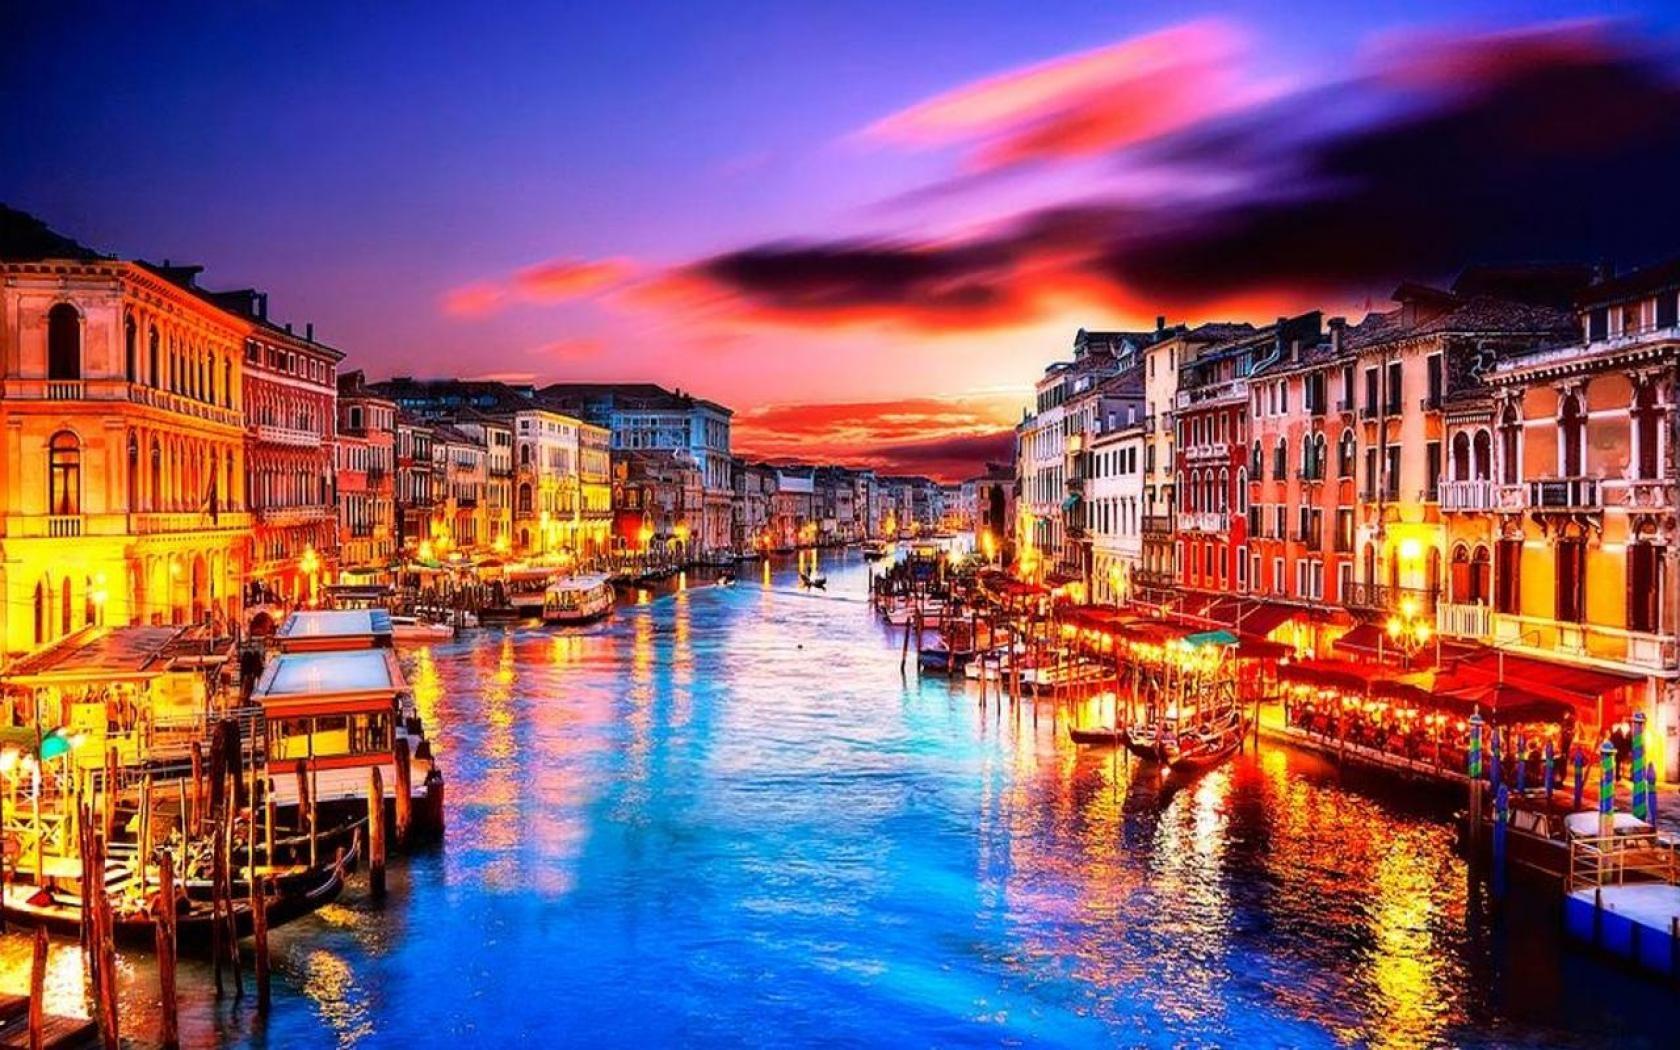 Venice Italy at Night. Romantic Venice At Night